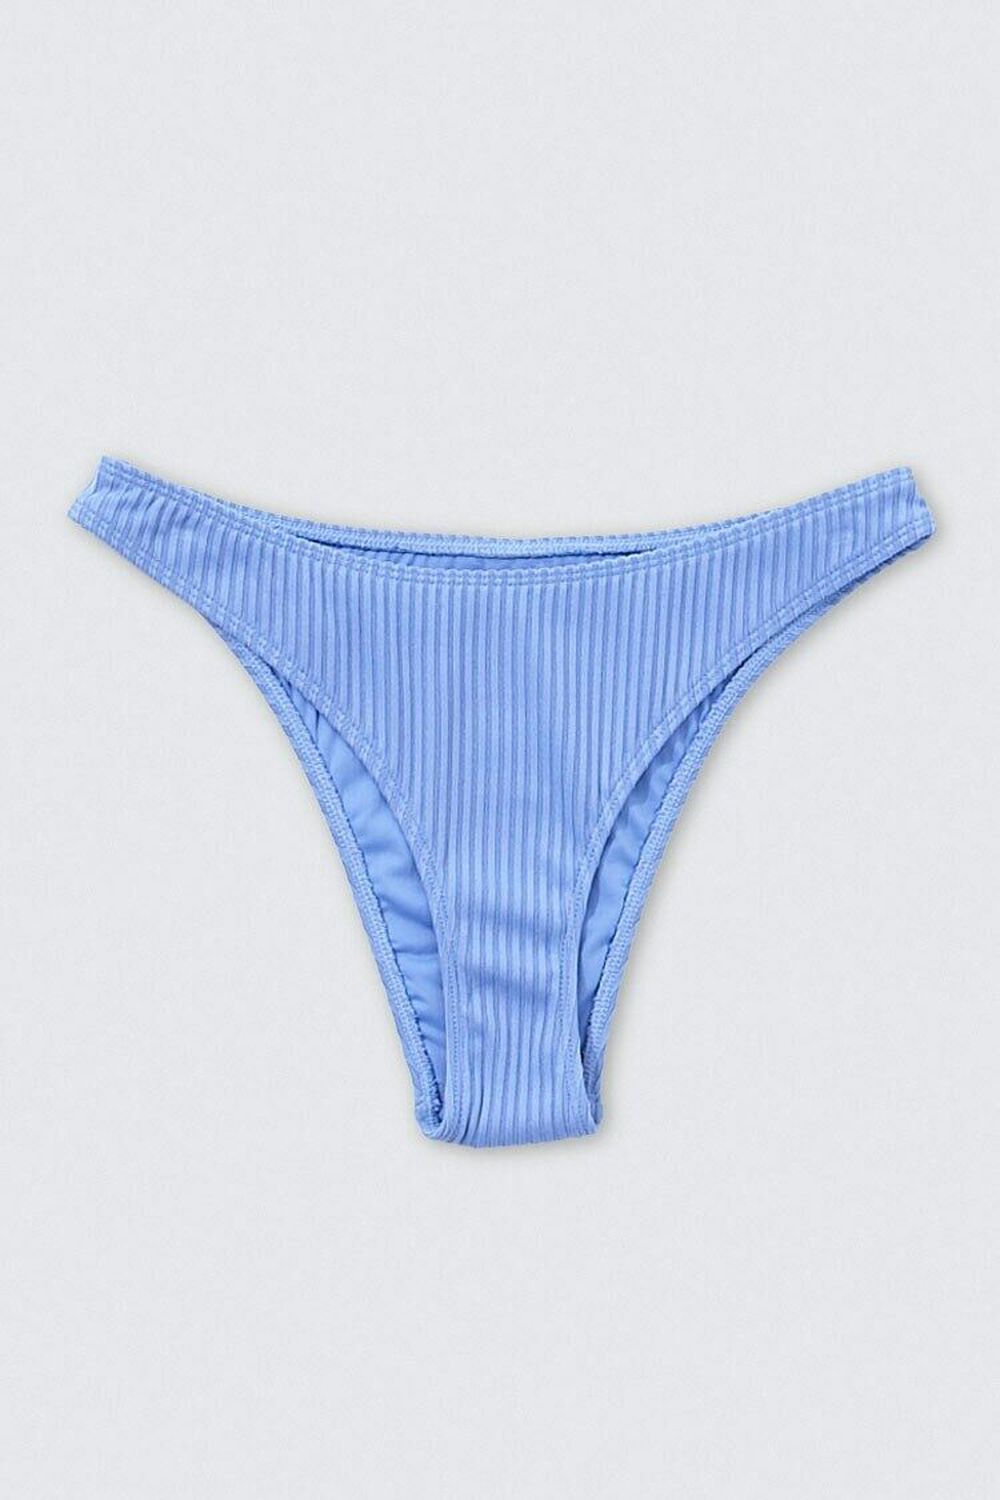 BLUE Cheeky Ribbed Bikini Bottoms, image 1